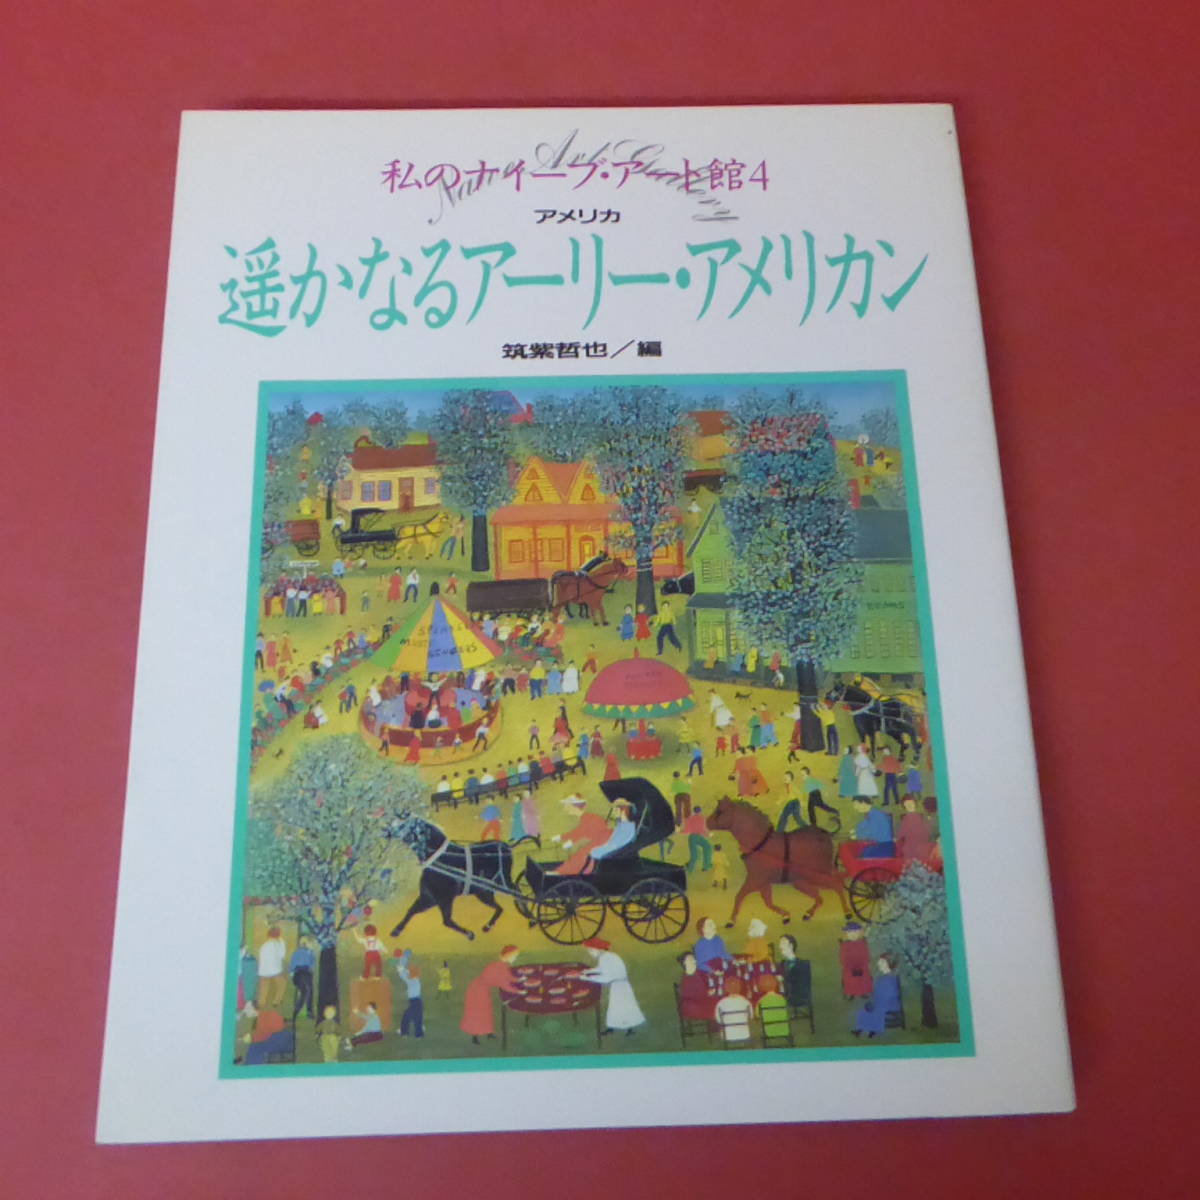 YN2-231208☆माई नैवे आर्ट म्यूज़ियम 4: दूर से प्रारंभिक अमेरिकी कला, तेत्सुया चिकुशी द्वारा संपादित, चित्रकारी, कला पुस्तक, संग्रह, सूची